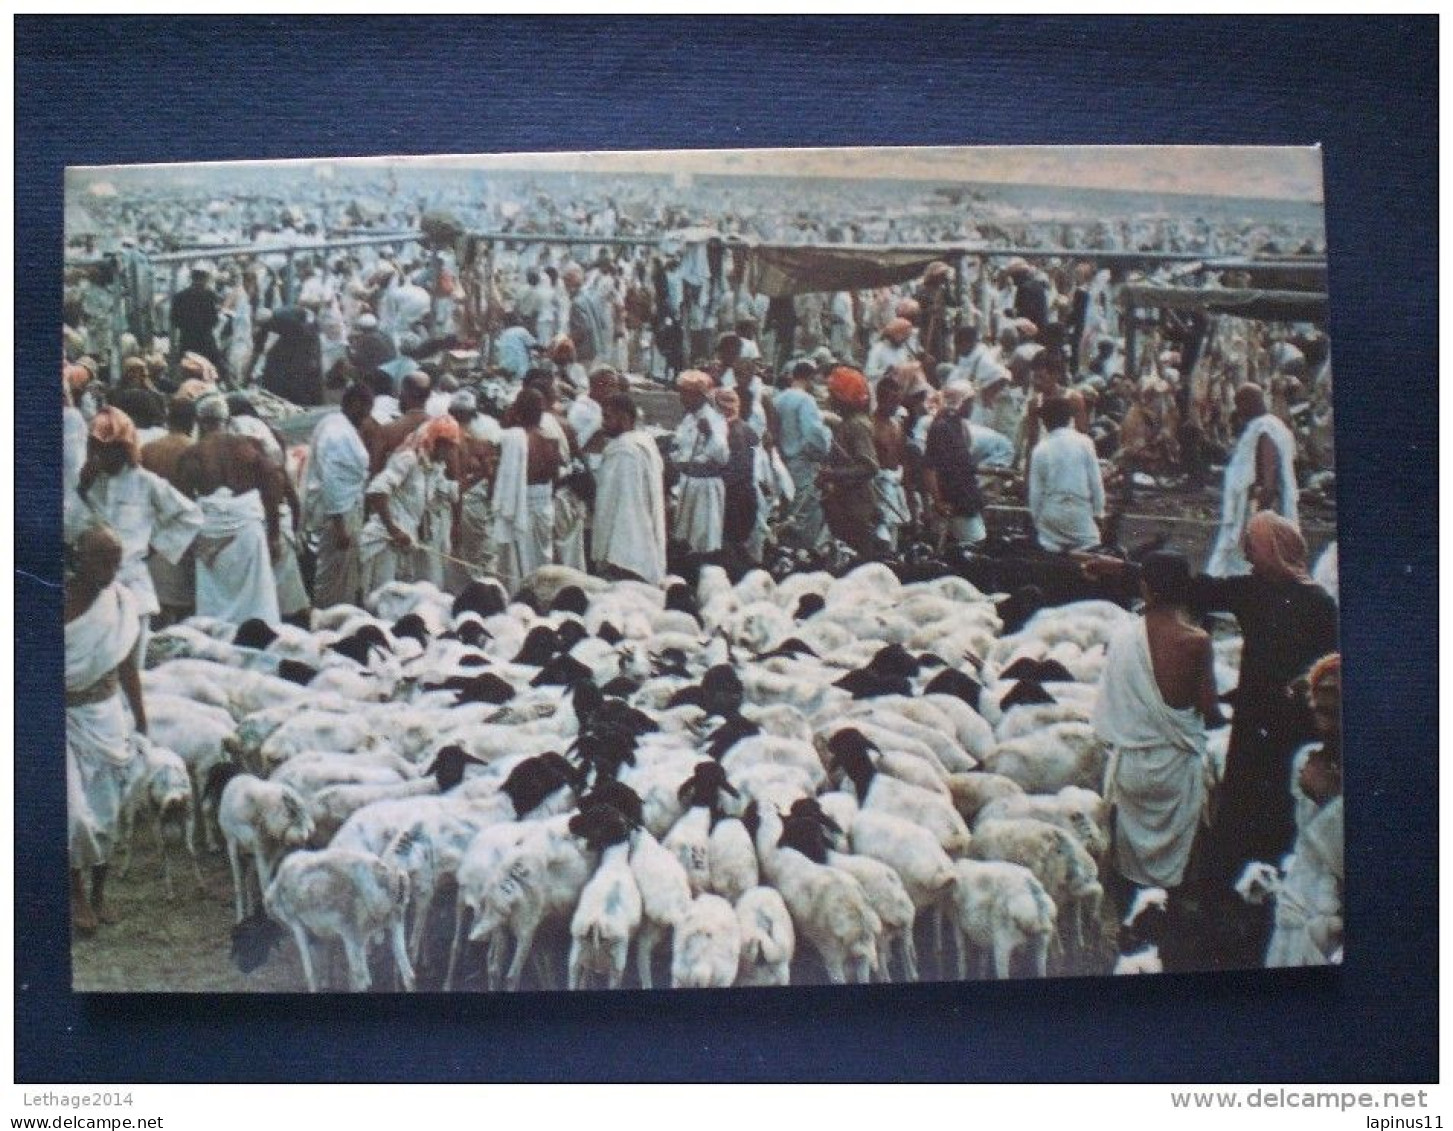 POSTCARD SAUDI ARABIA 1960 THE SACRIFICE AT MINA - Arabie Saoudite